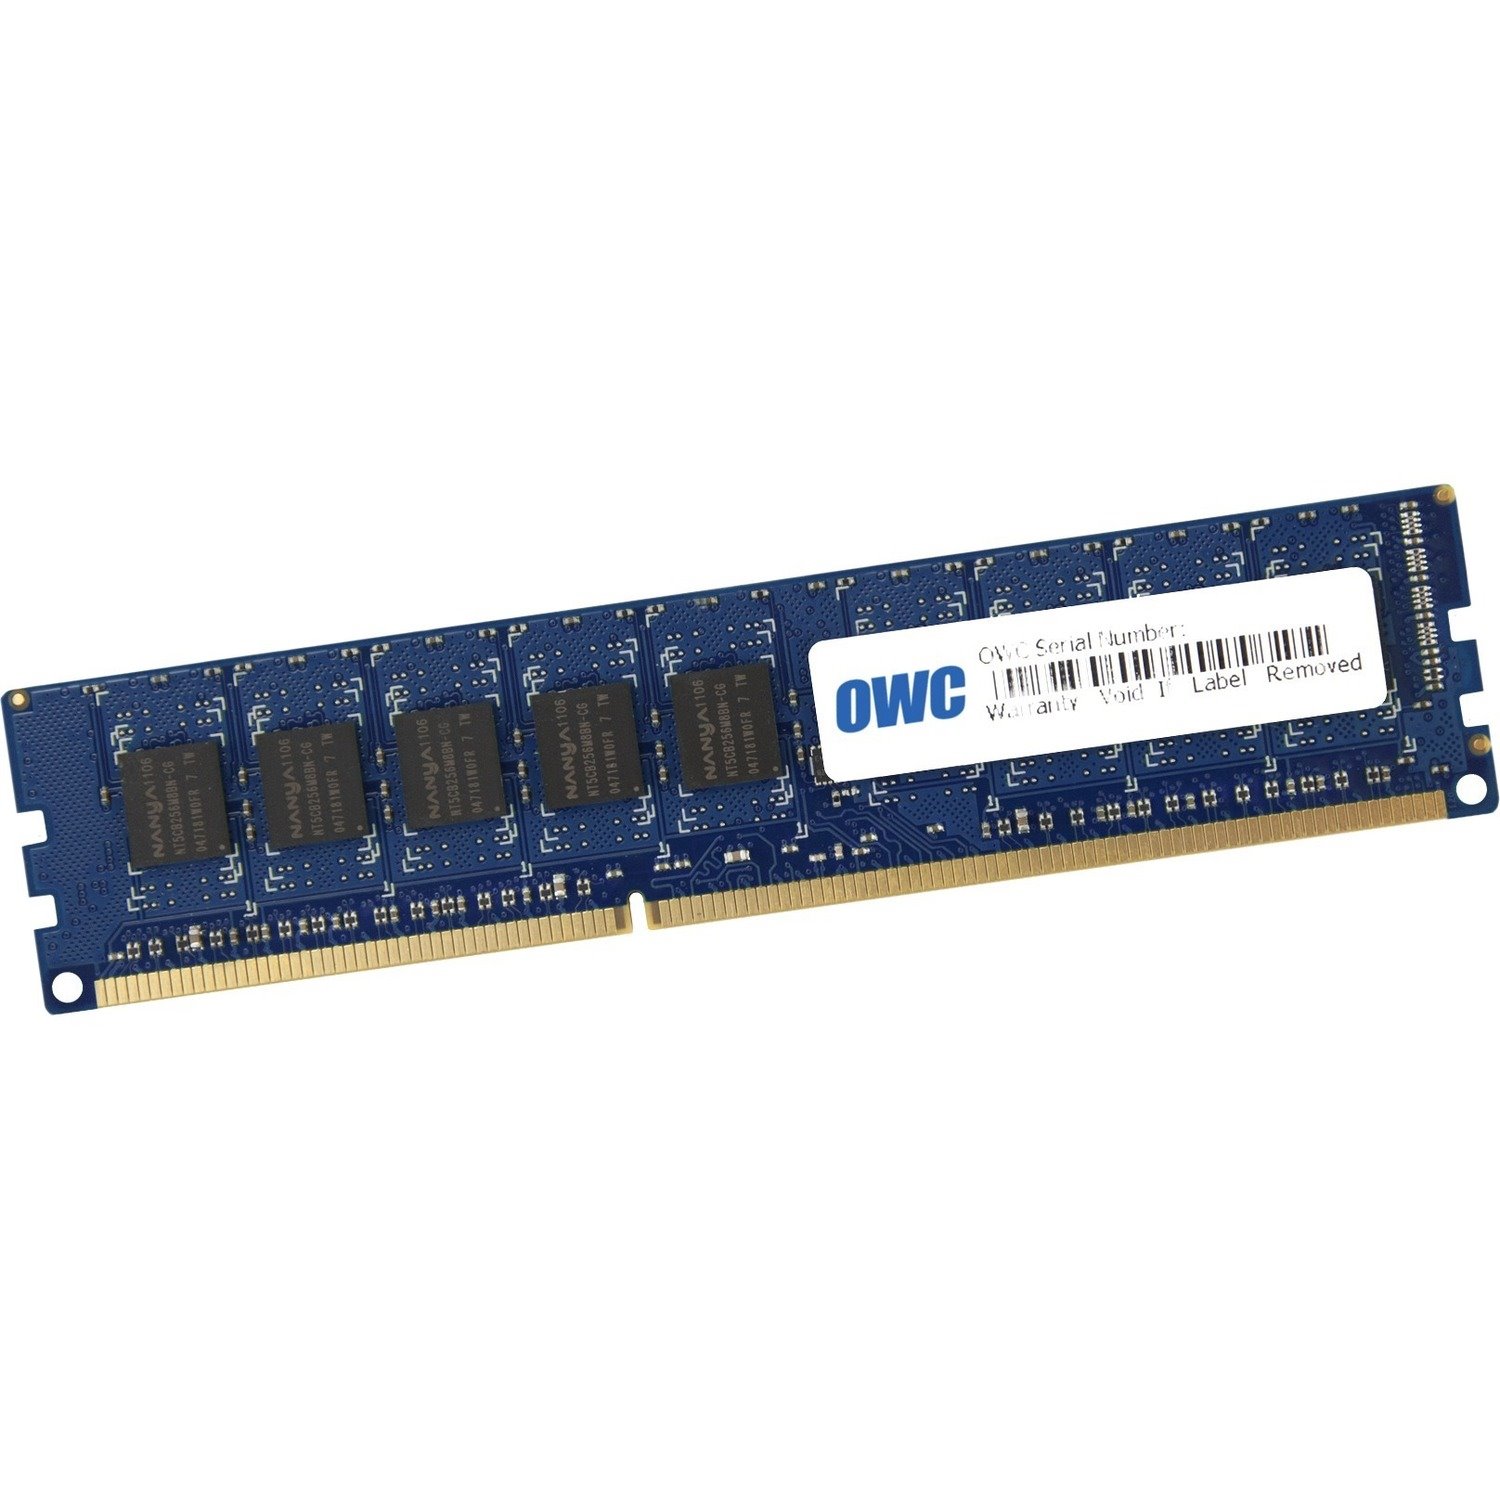 OWC RAM Module for Workstation, Server - 8 GB - DDR3-1066/PC3-8500 DDR3 SDRAM - 1066 MHz - CL7 - 1.50 V